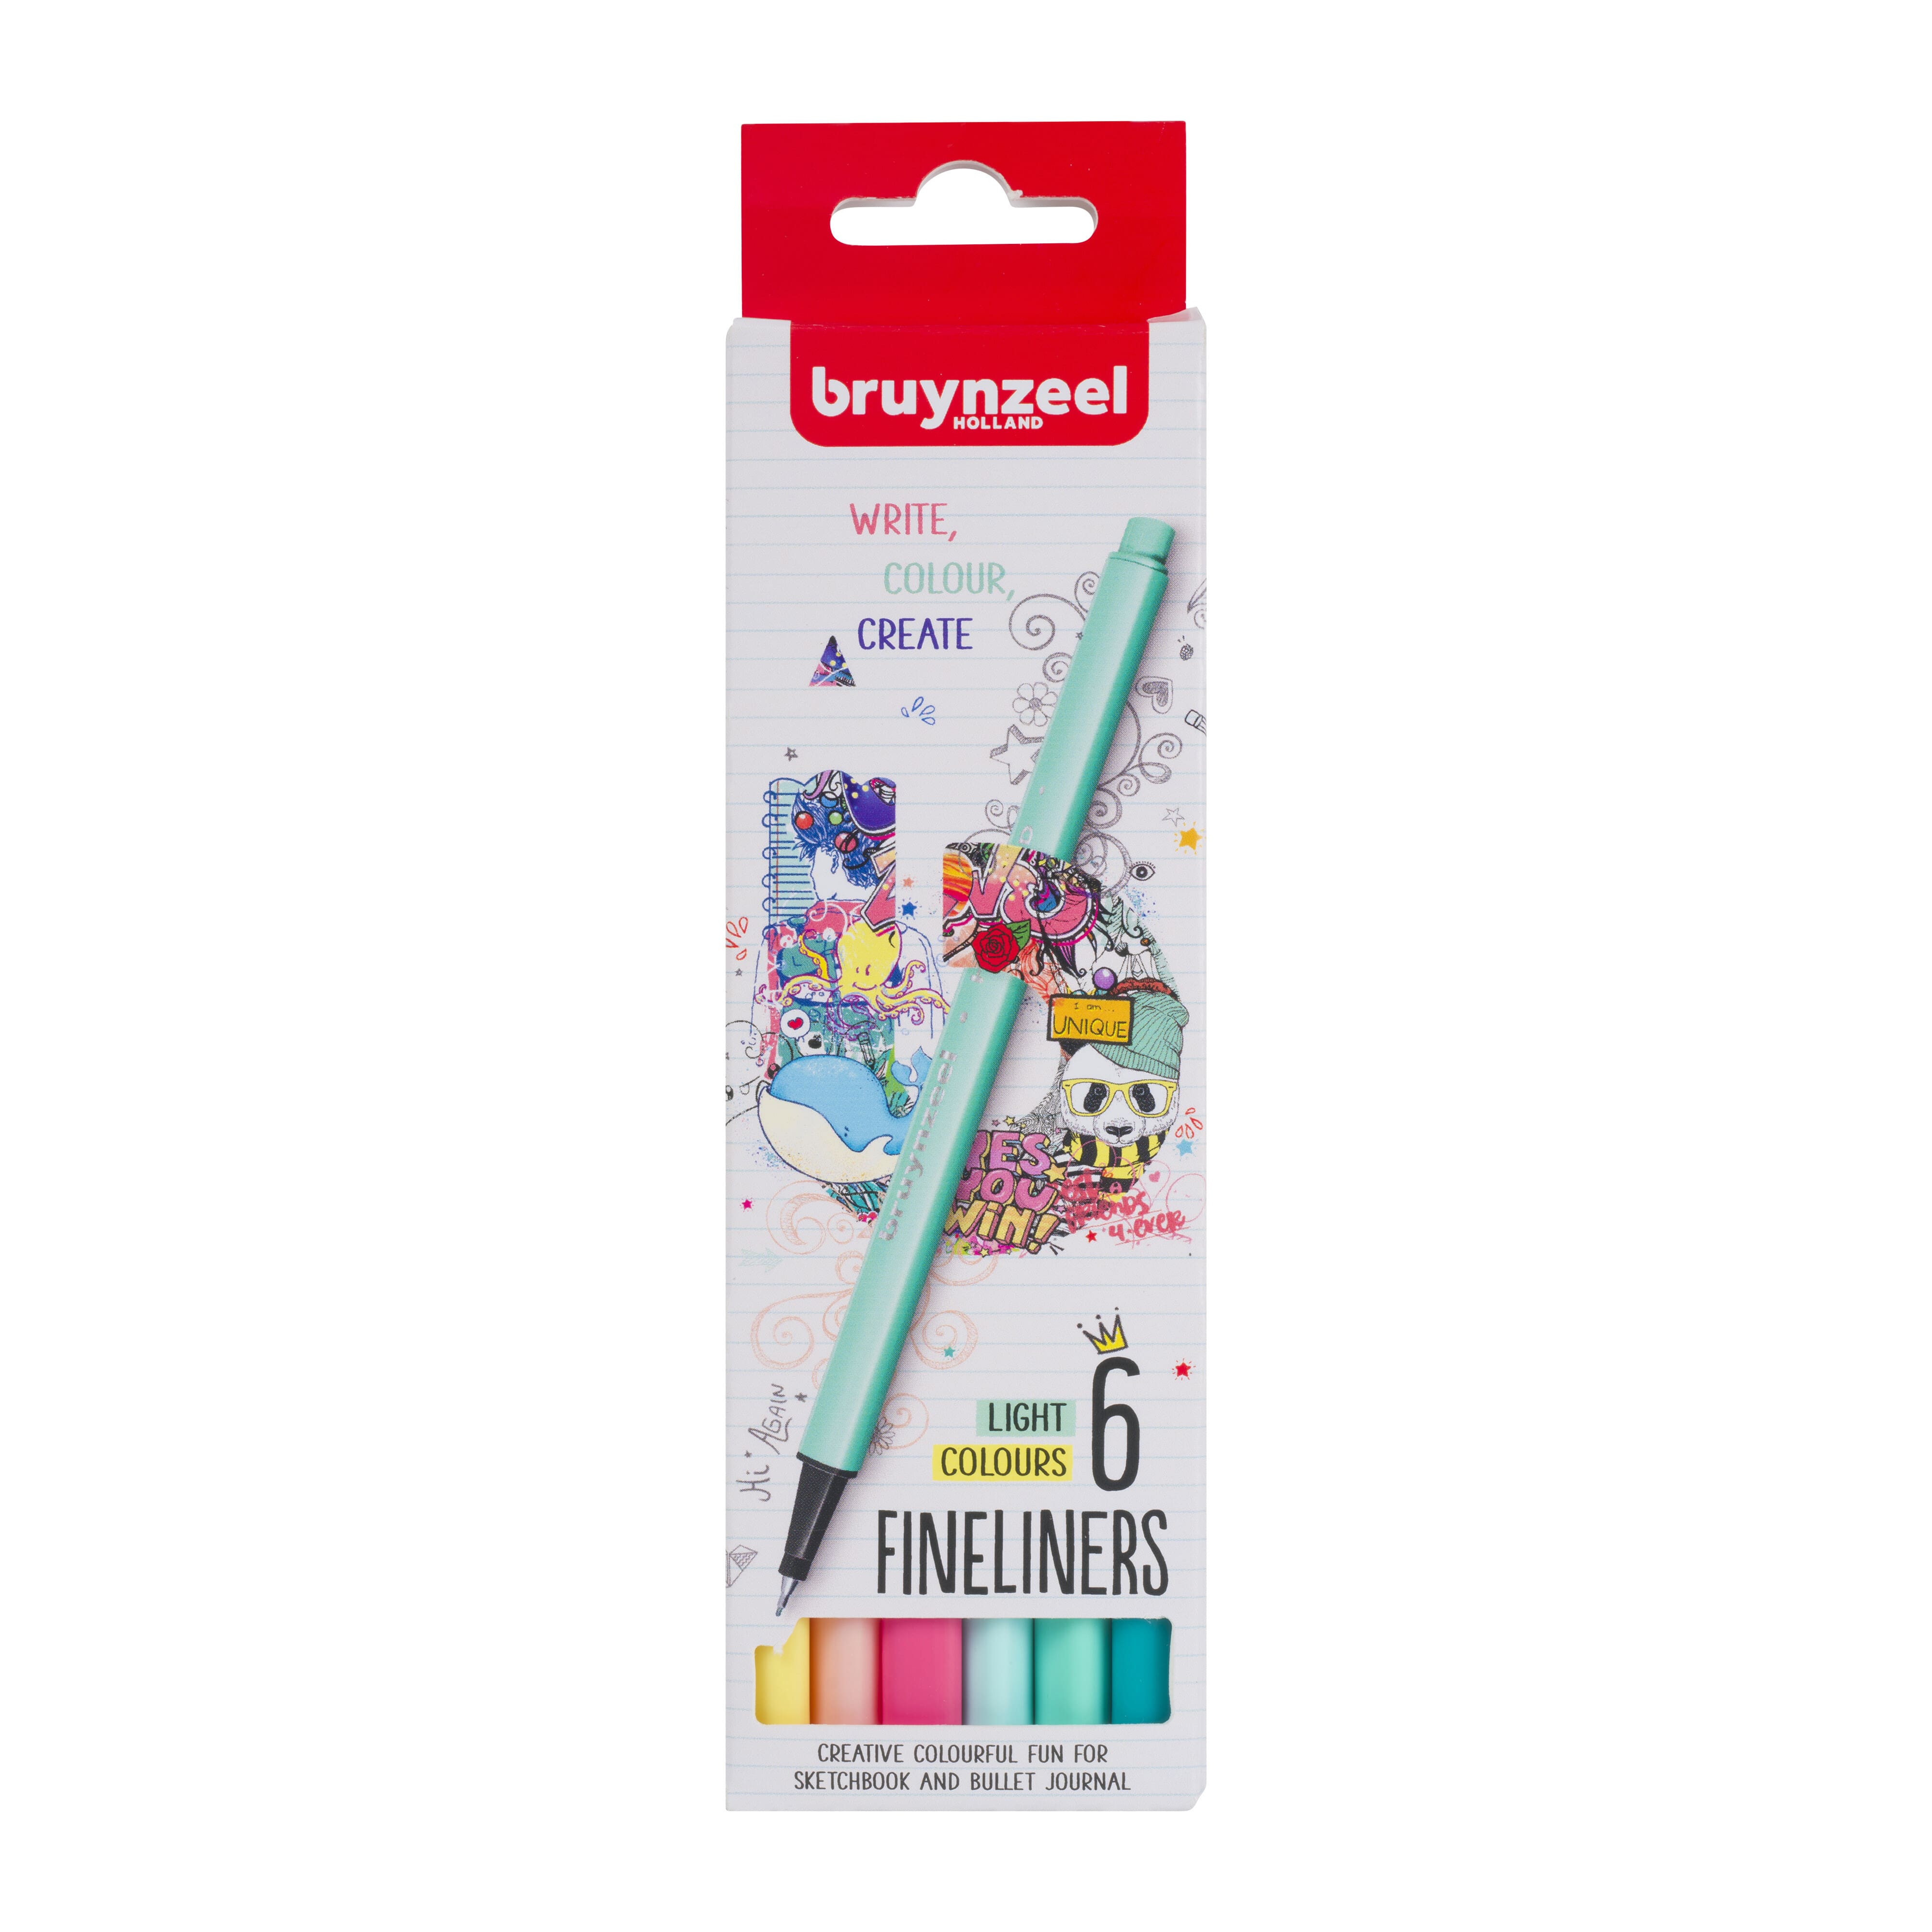 Bruynzeel Fineliner Light Colors Pen Set